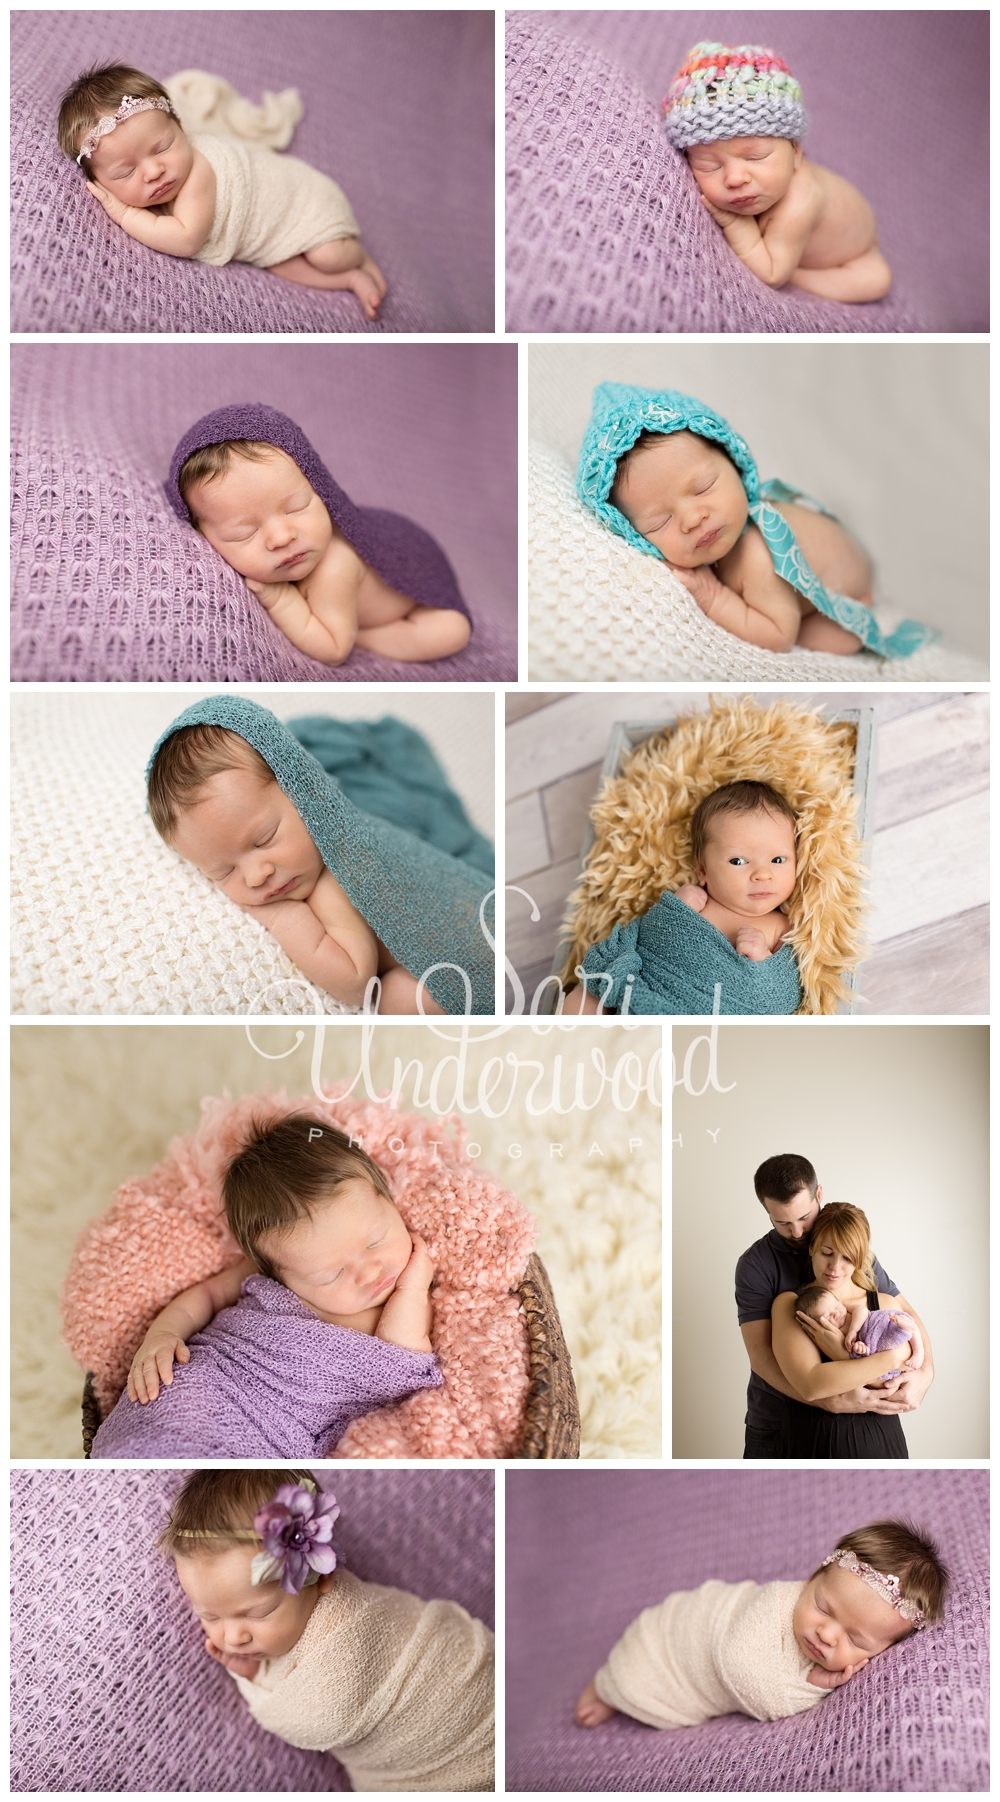 Sari Underwood - Central Florida newborn baby photographer